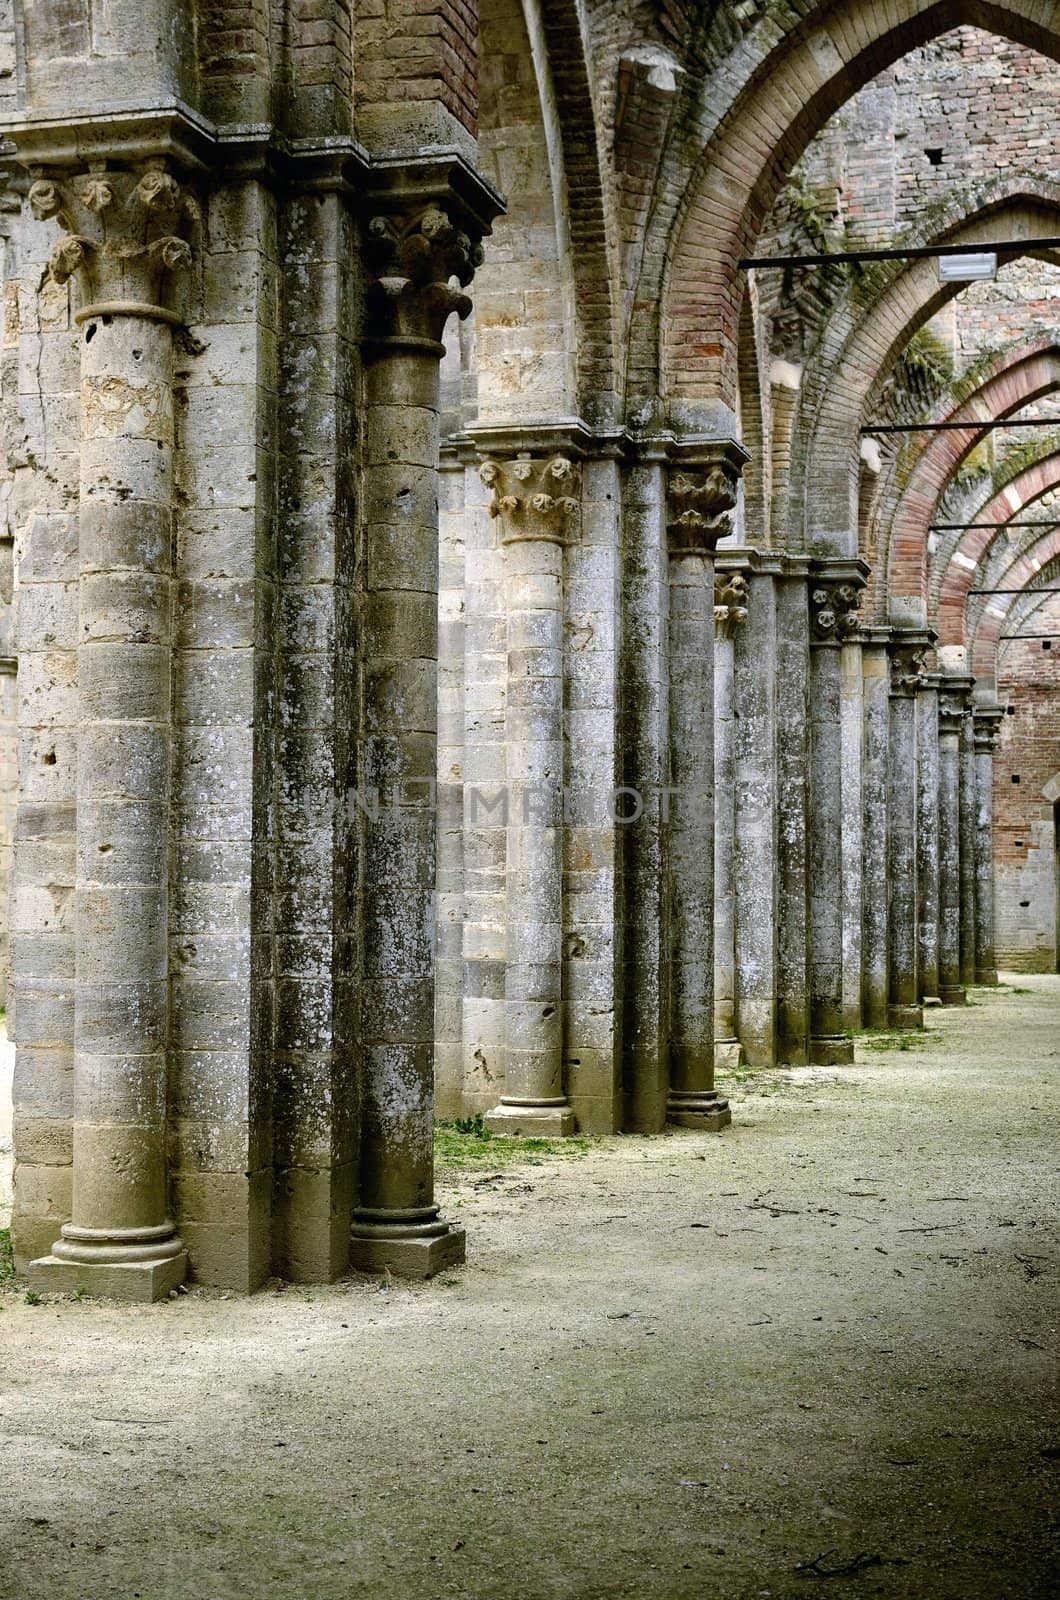 The ruins of San Galgano Abbey in Tuscany